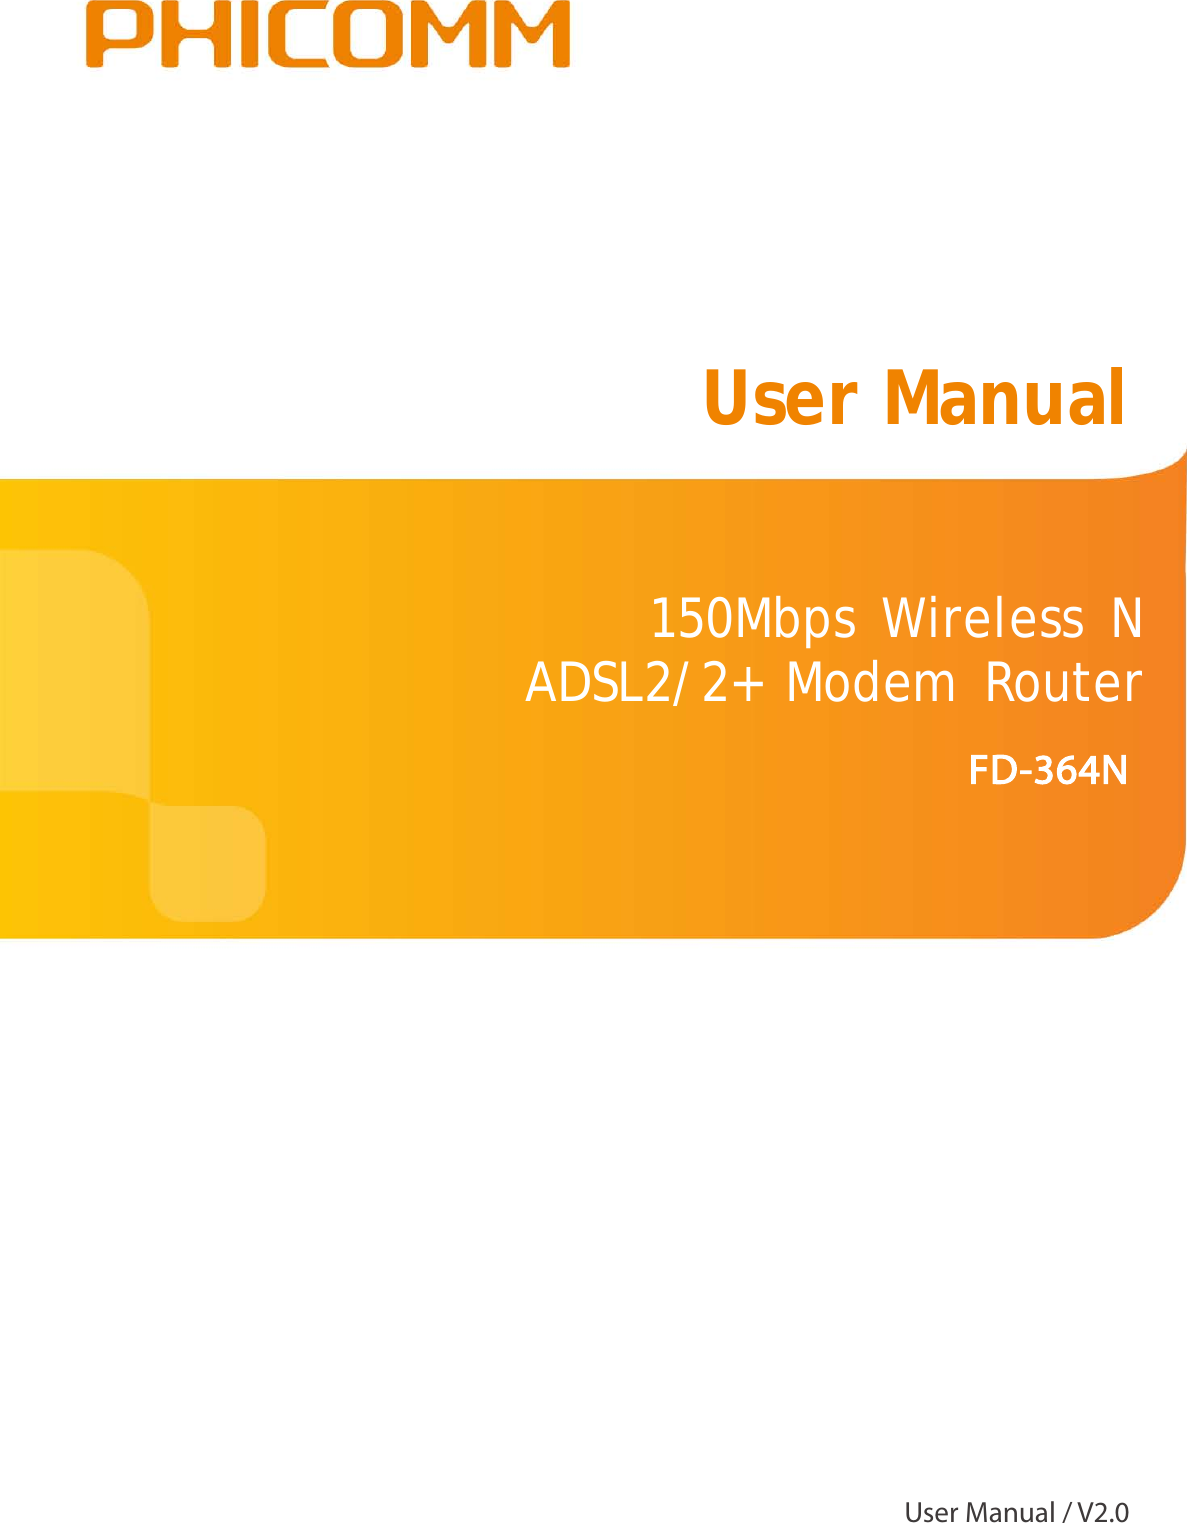                                                            150Mbps Wireless N  ADSL2/2+ Modem Router  FD-364N  User Manual  User Manual / V2.0 